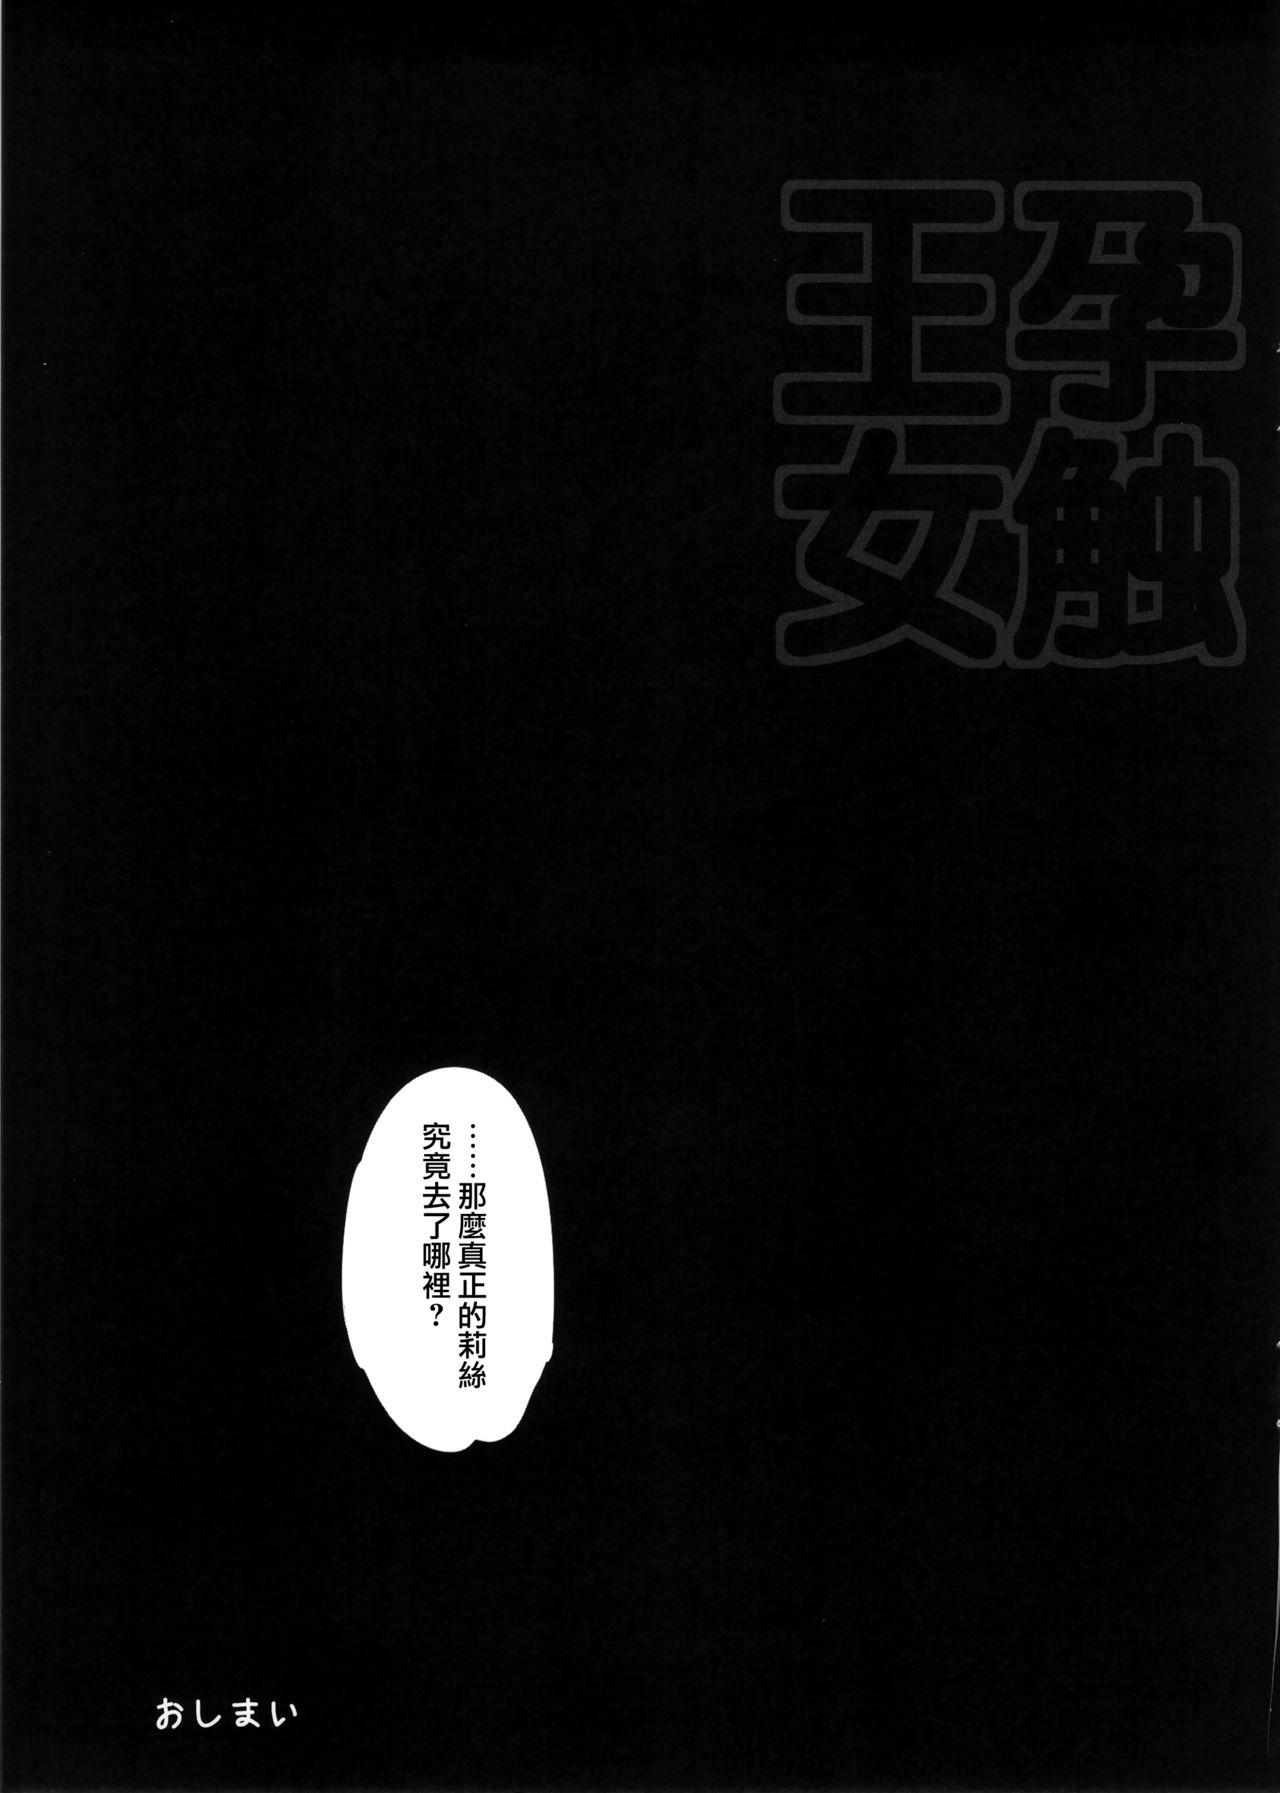 Friends Harafure - Seiken densetsu 3 Foot Job - Page 10